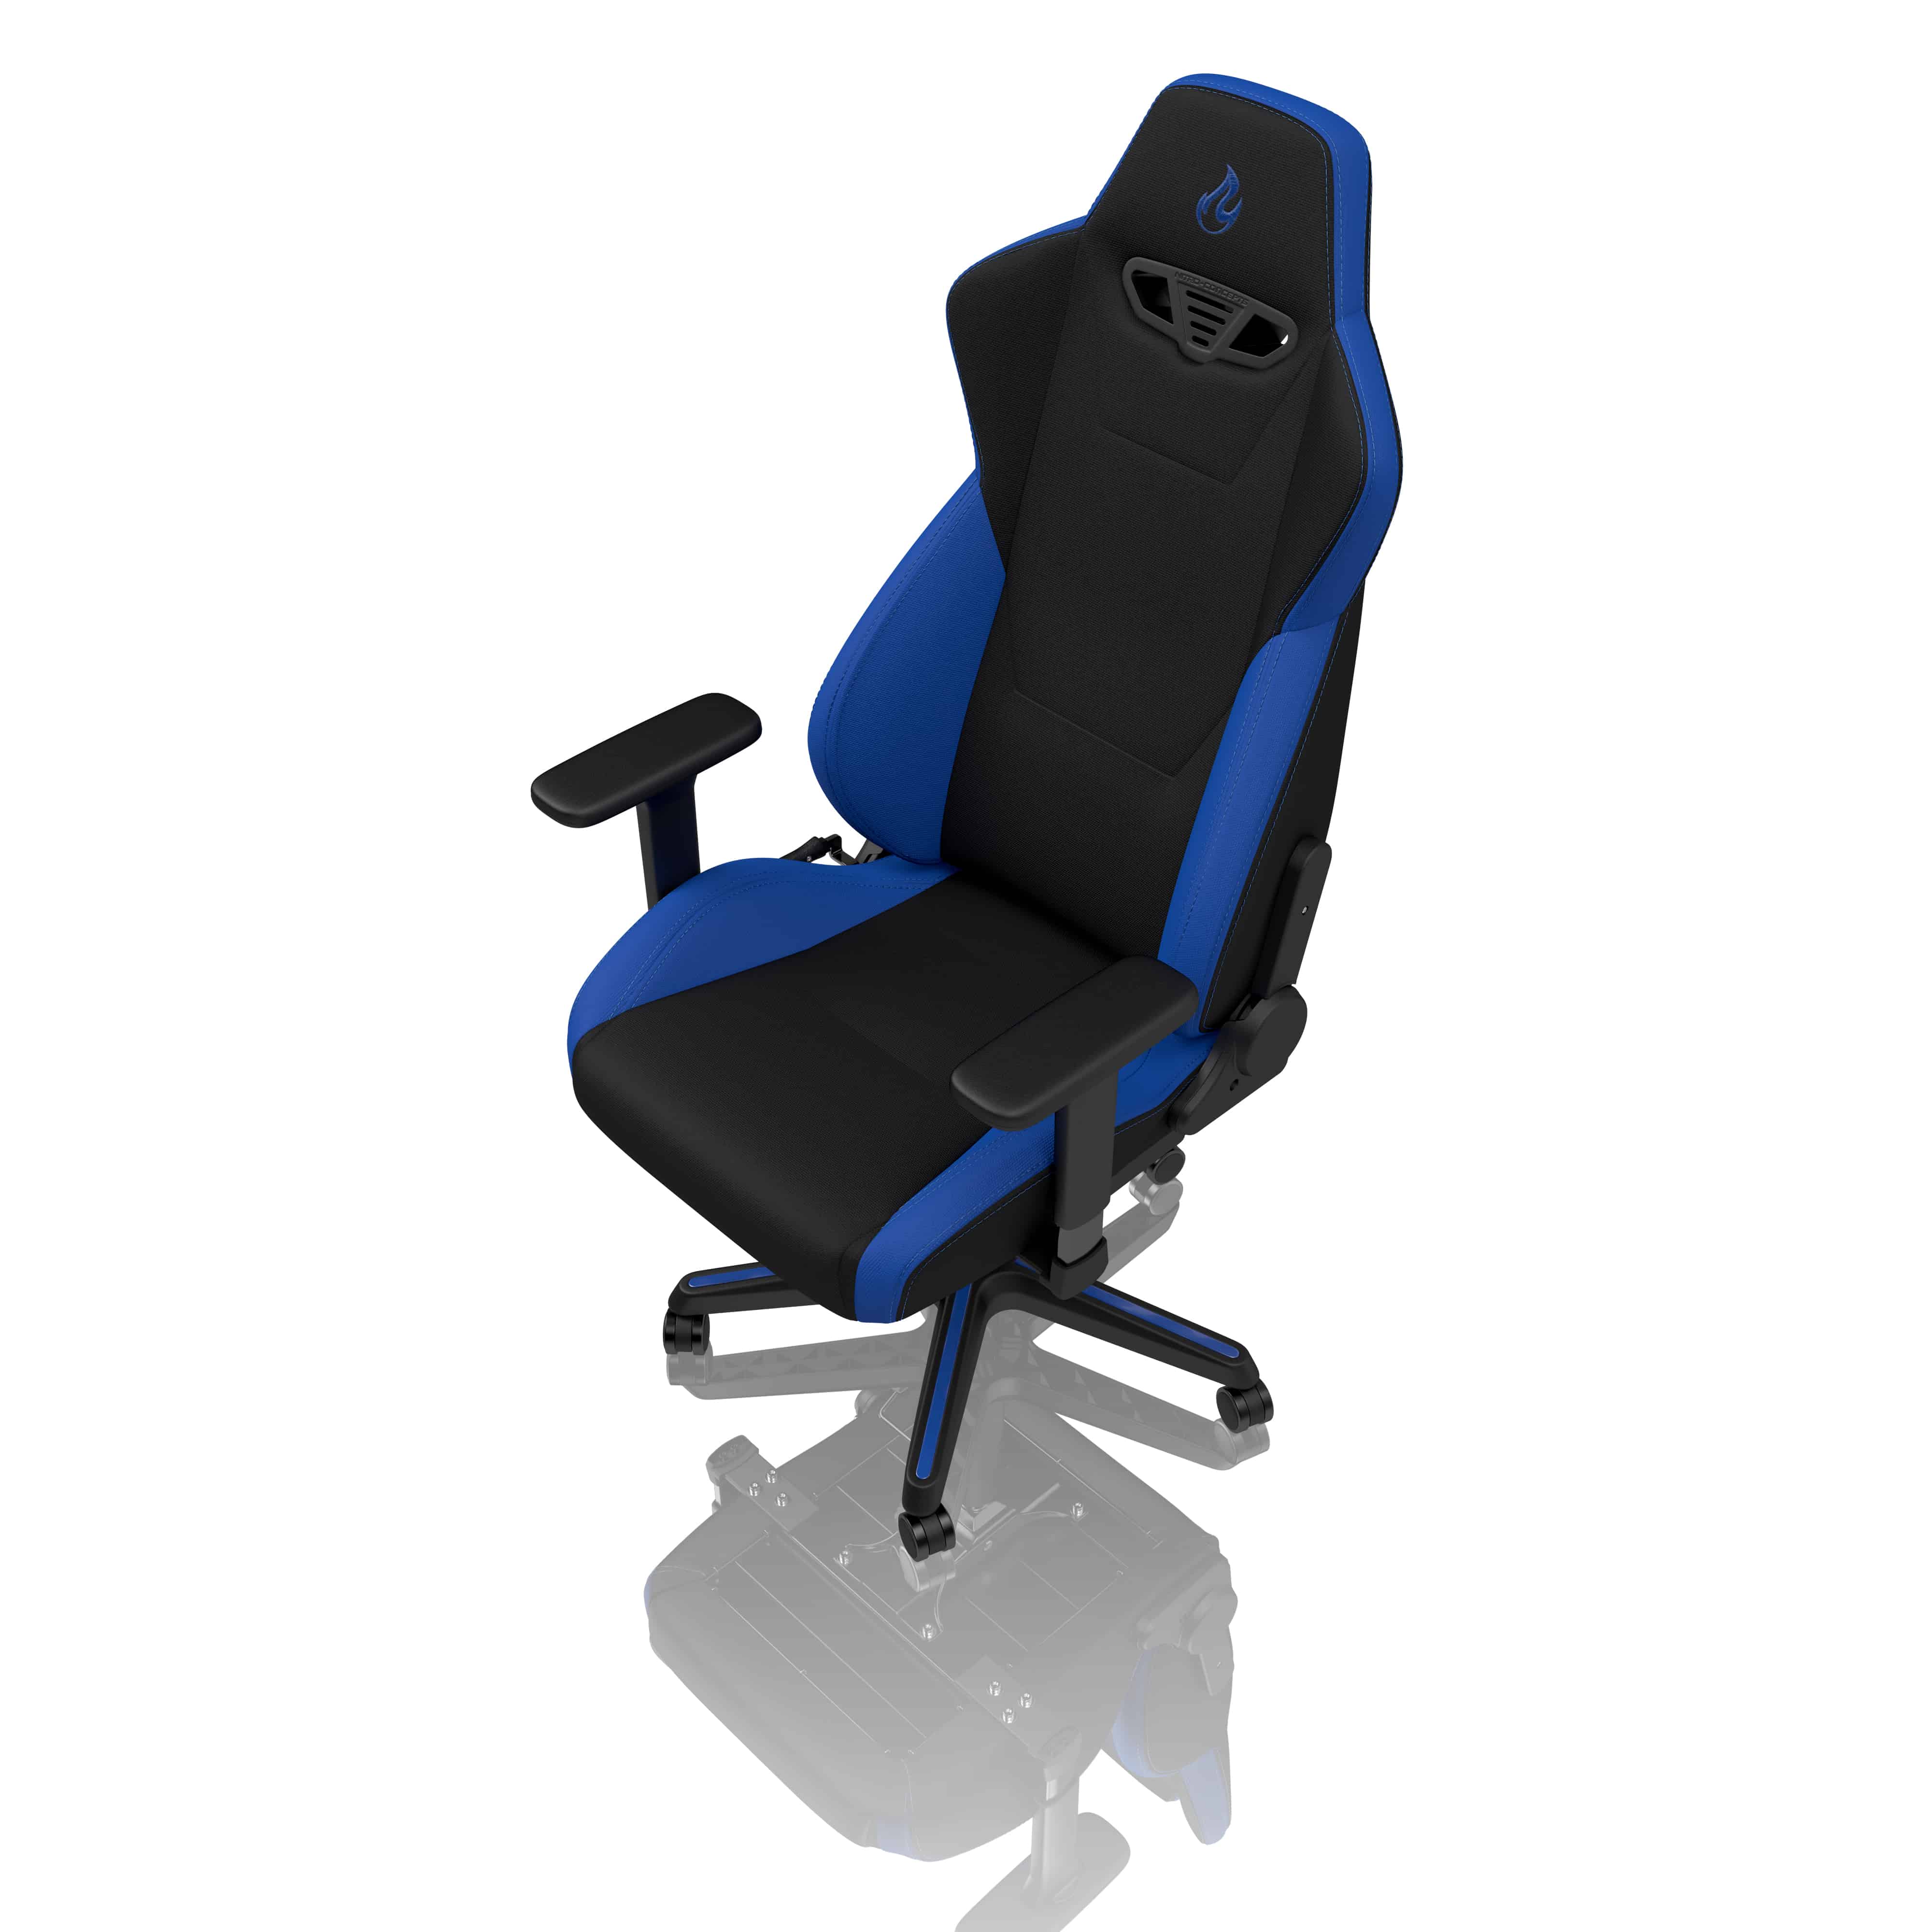 Gamer szék Nitro Concepts S300 Galactic Blue - Fekete/Kék